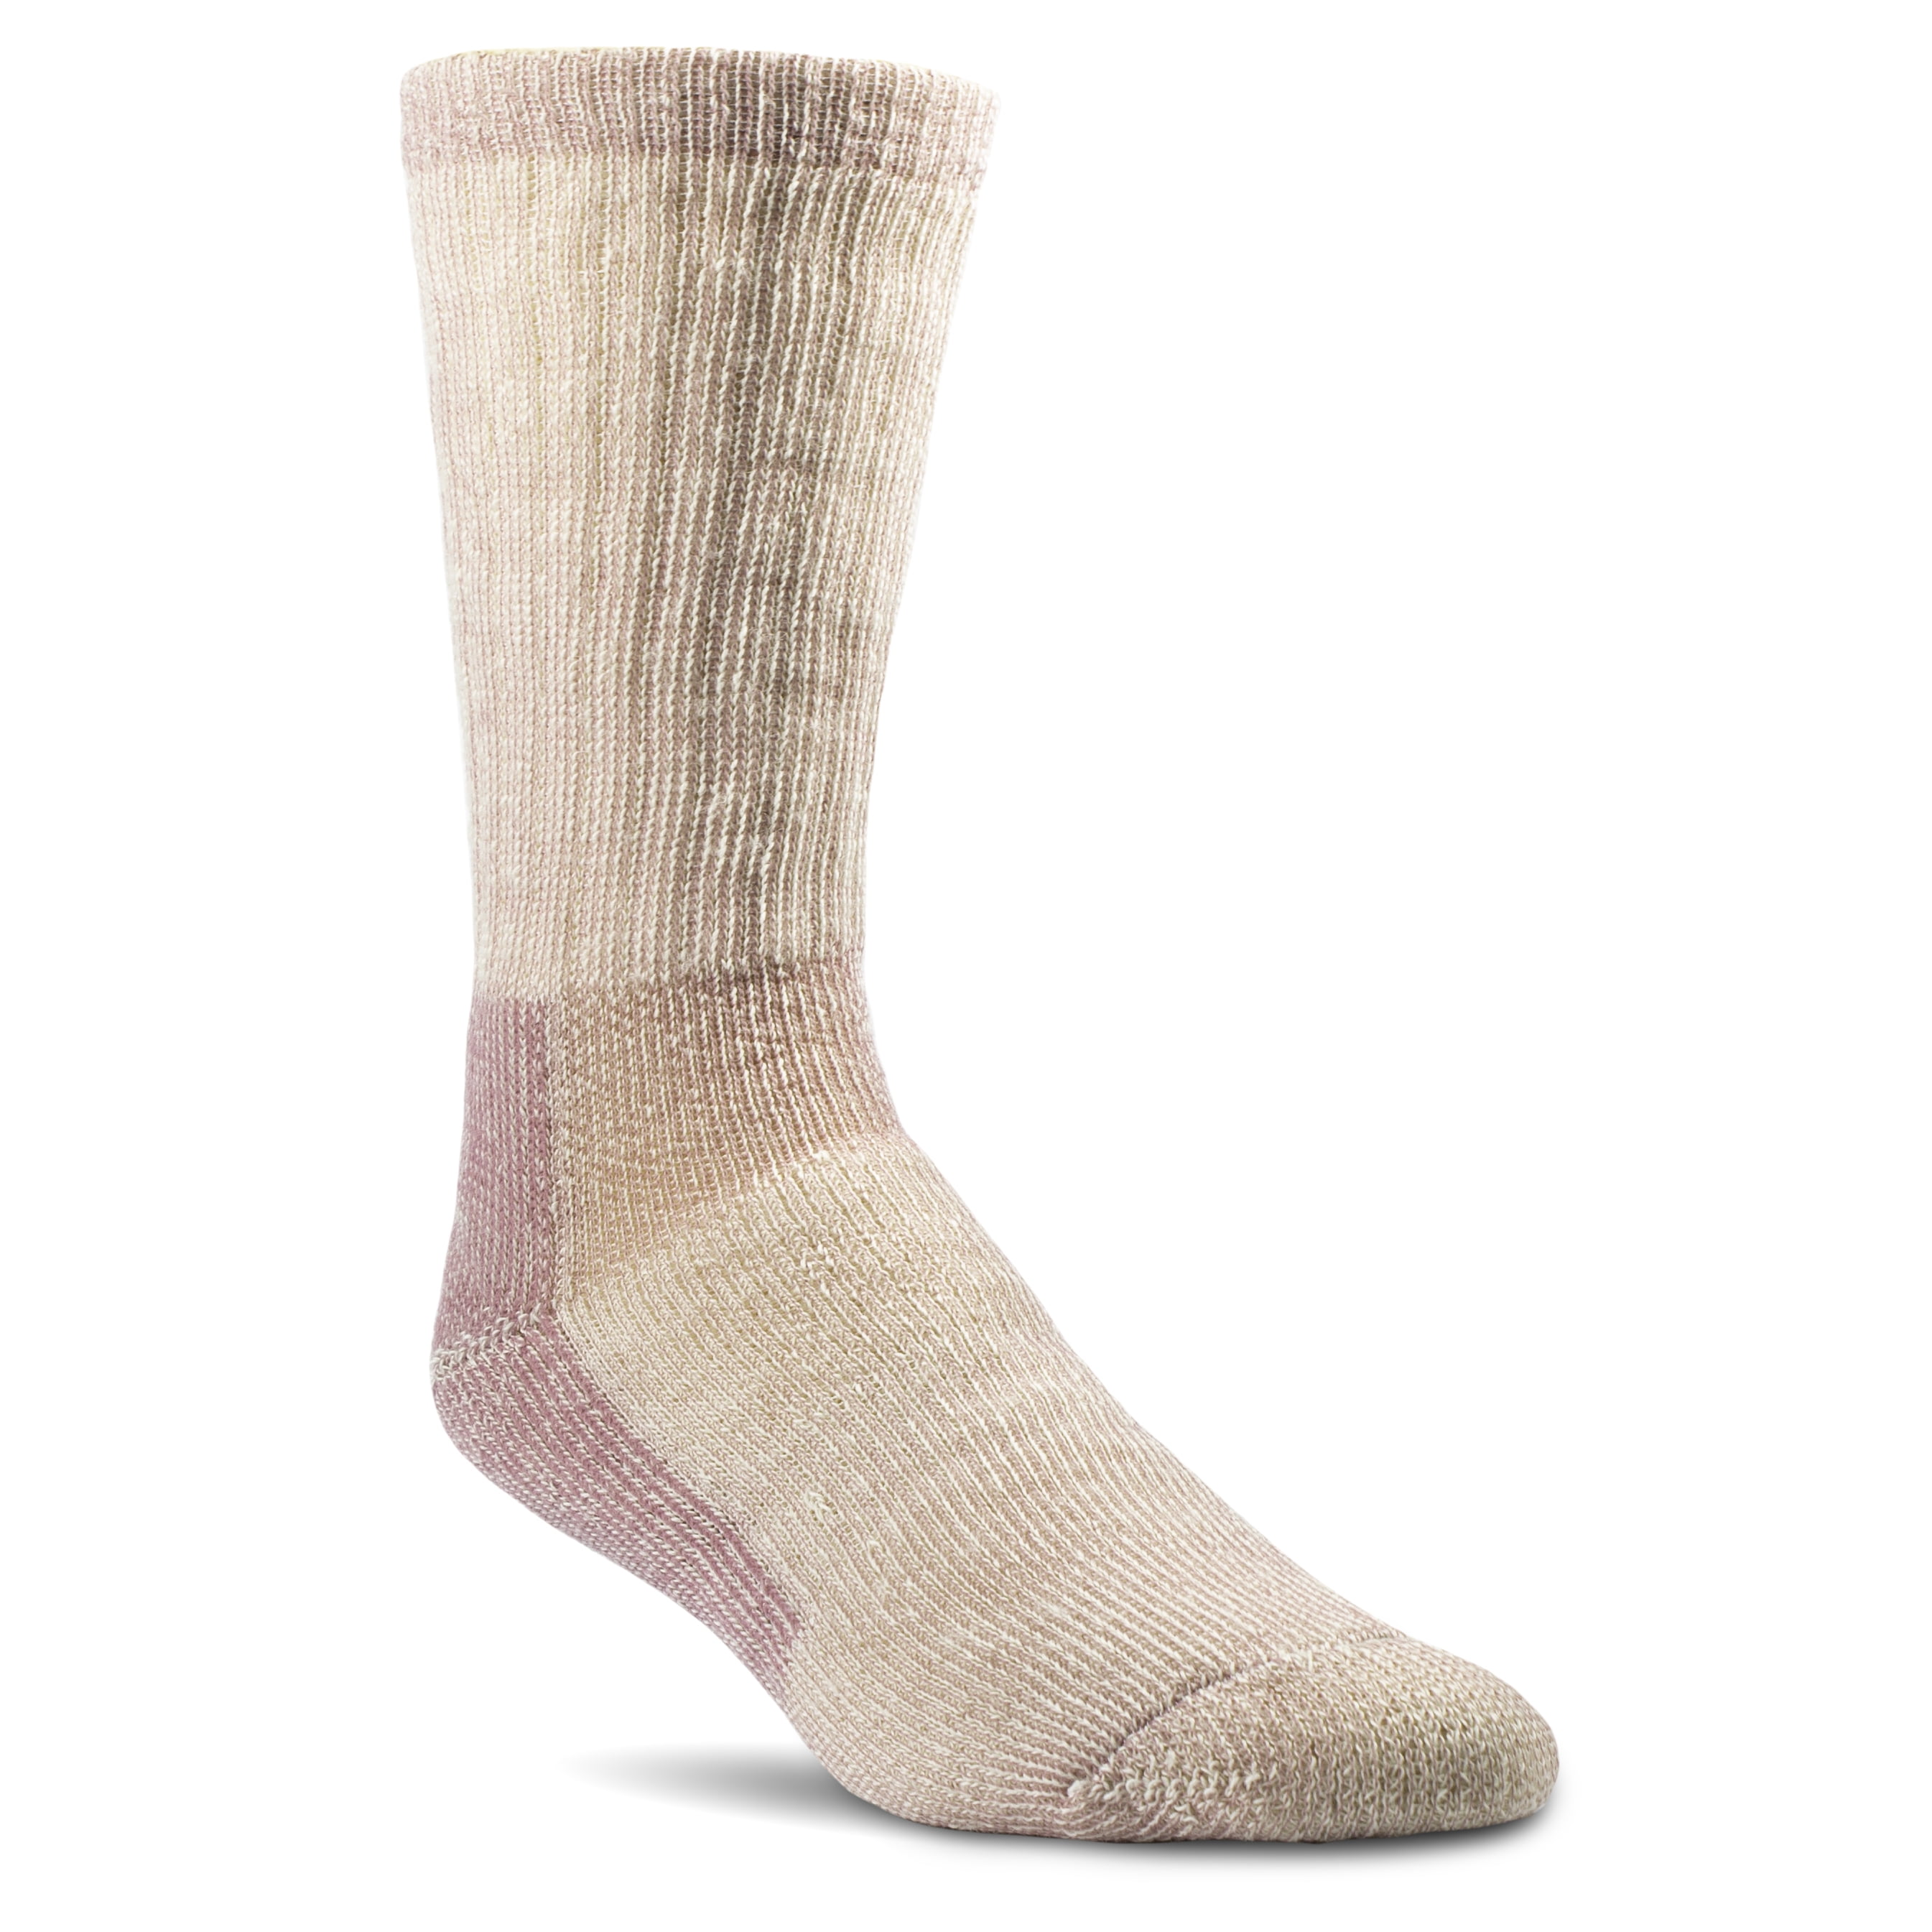 Realtree®  Women's Merino Wool Midweight Hiking Crew Socks (Size Medium, Pink)